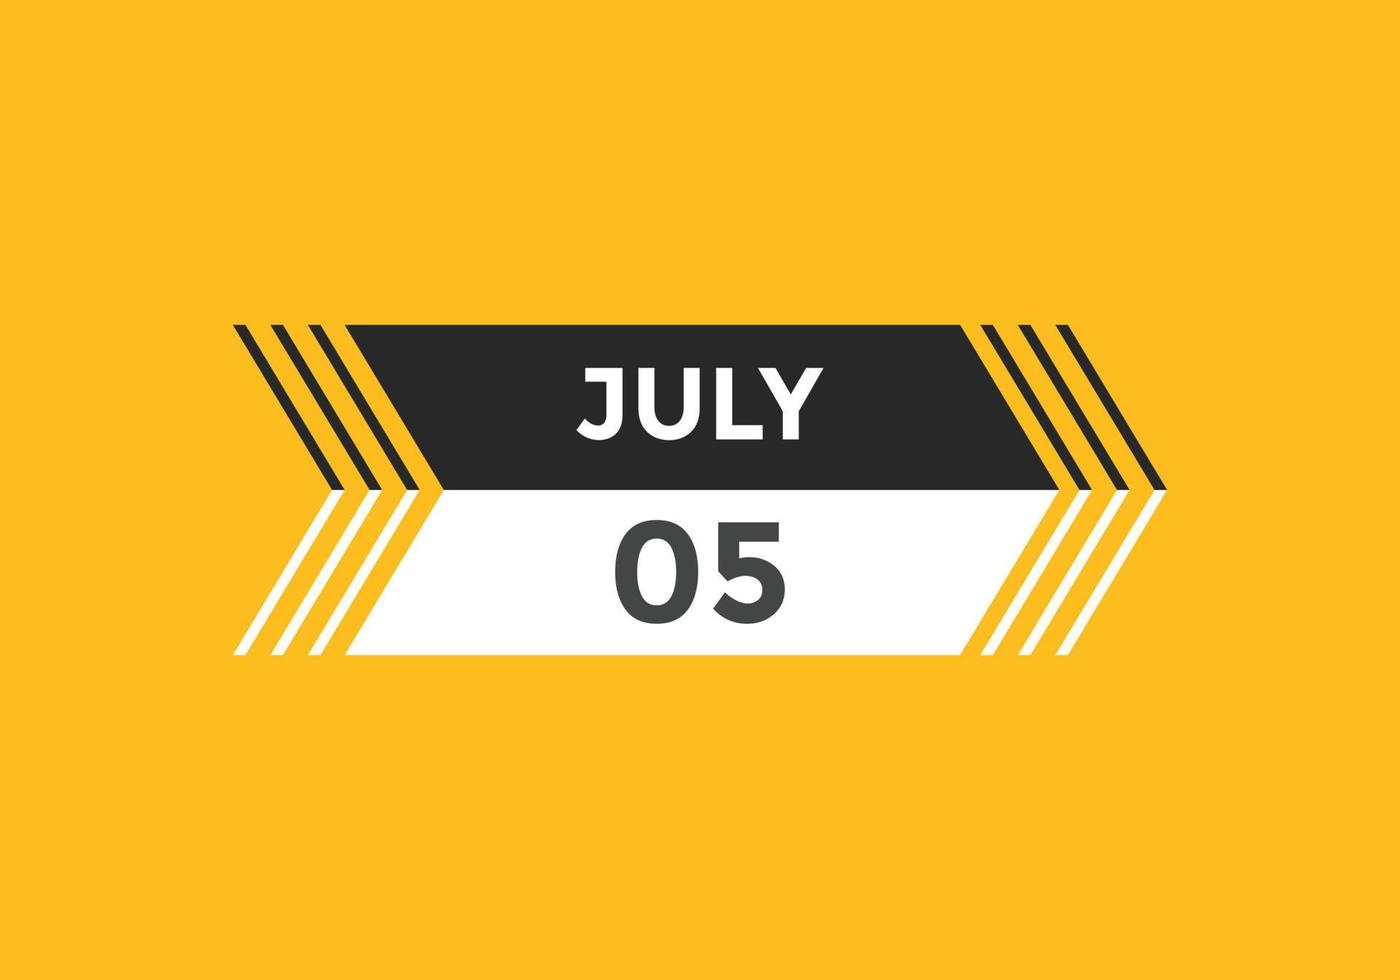 july 5 calendar reminder. 5th july daily calendar icon template. Calendar 5th july icon Design template. Vector illustration